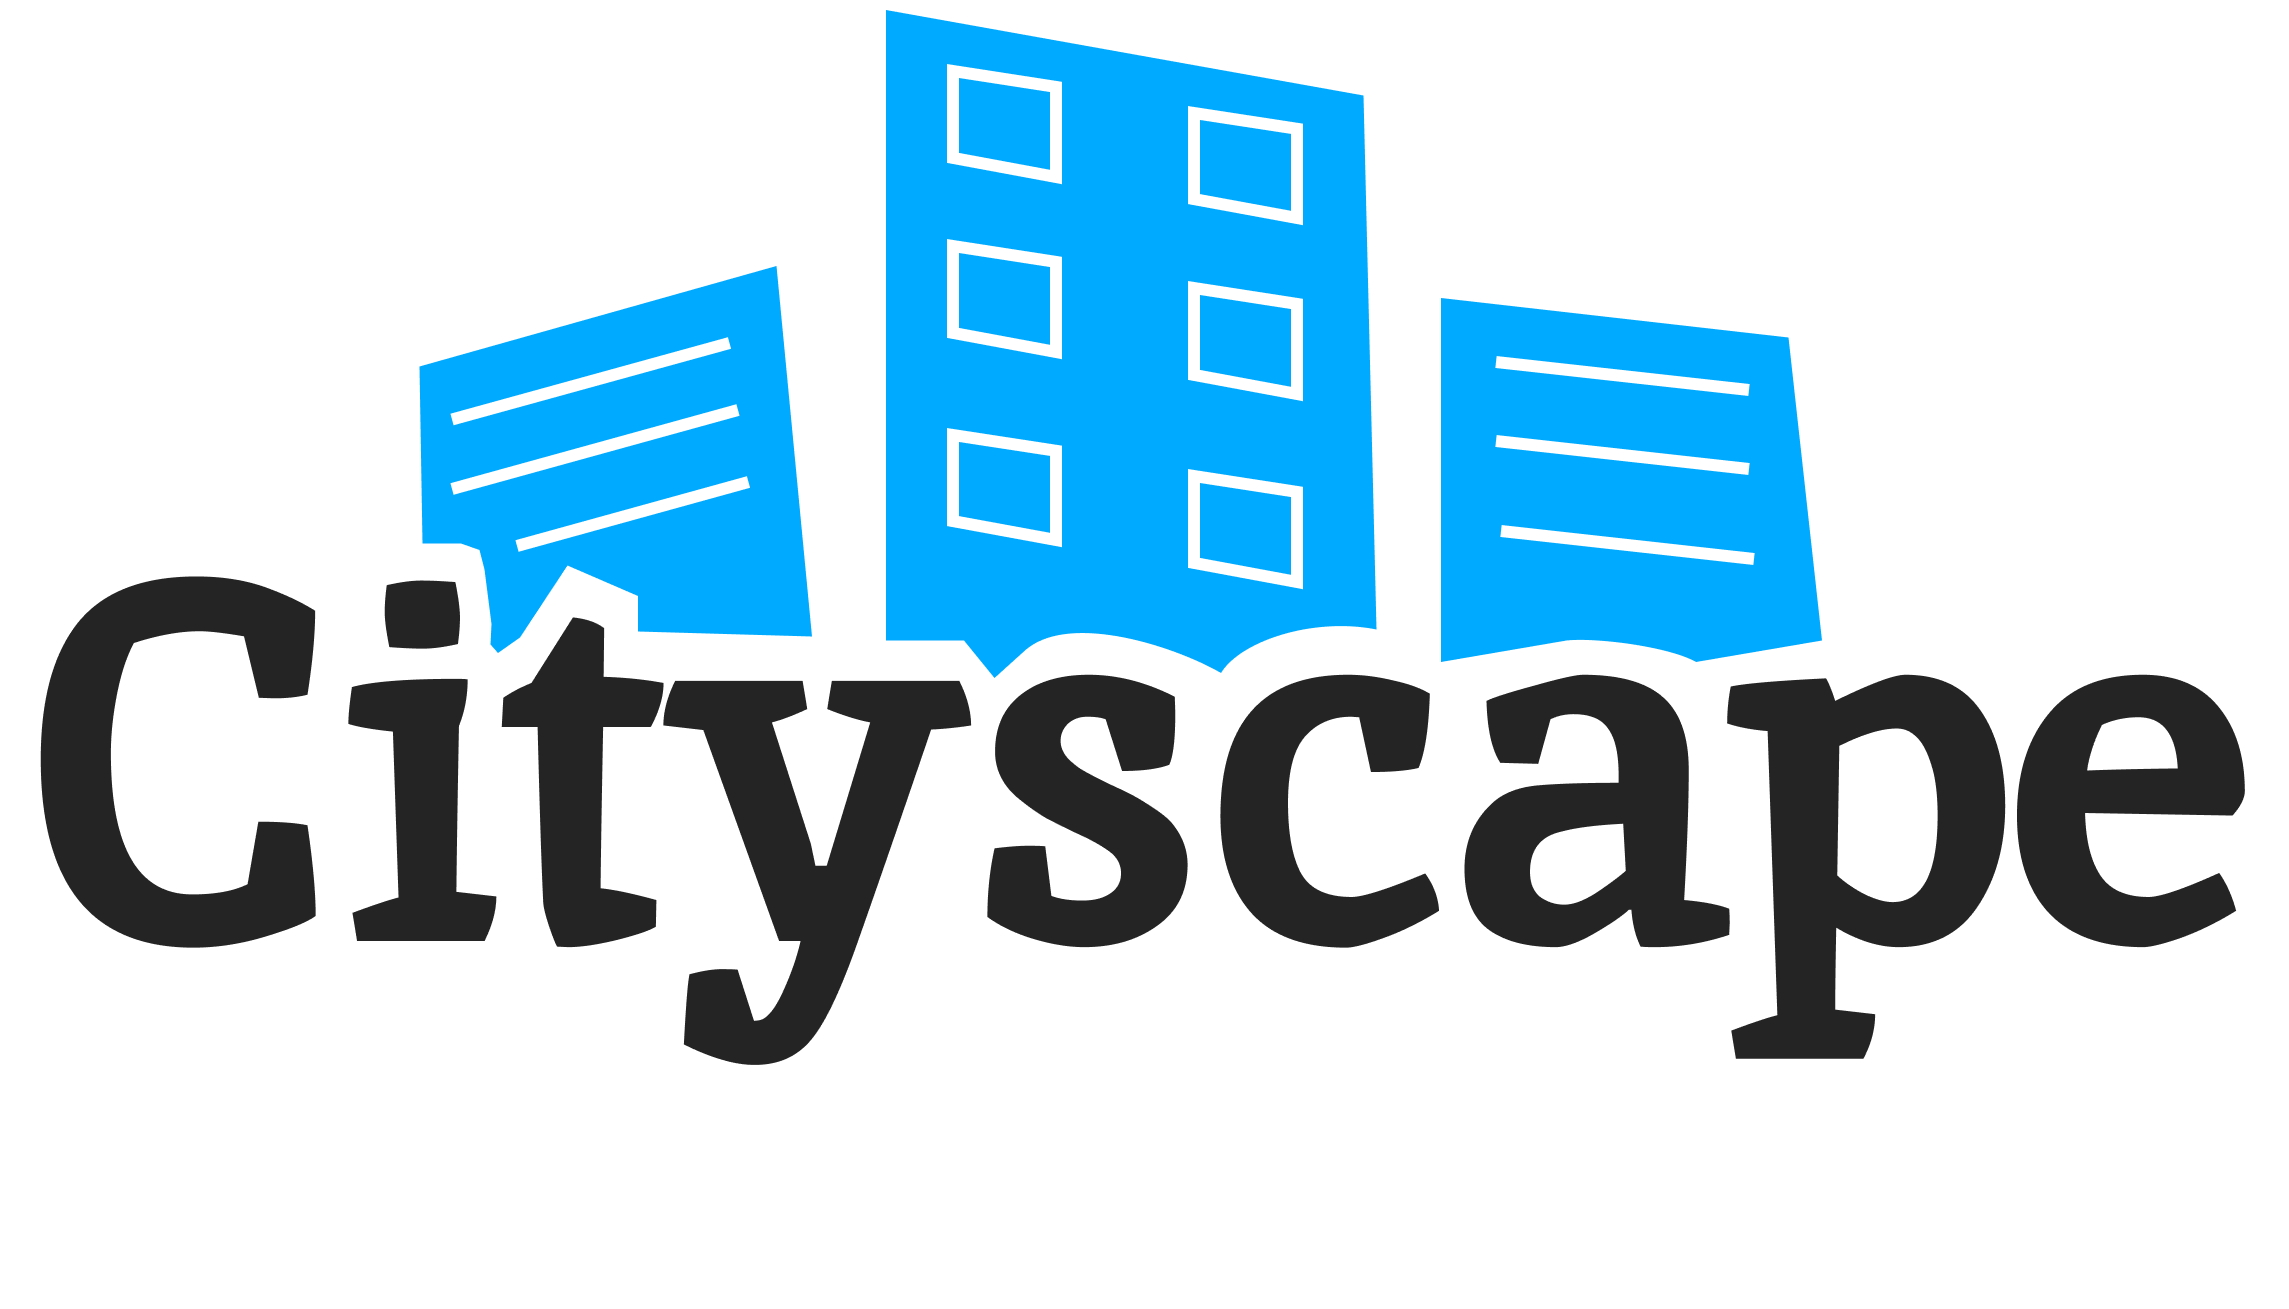 Cityscape Chronicles